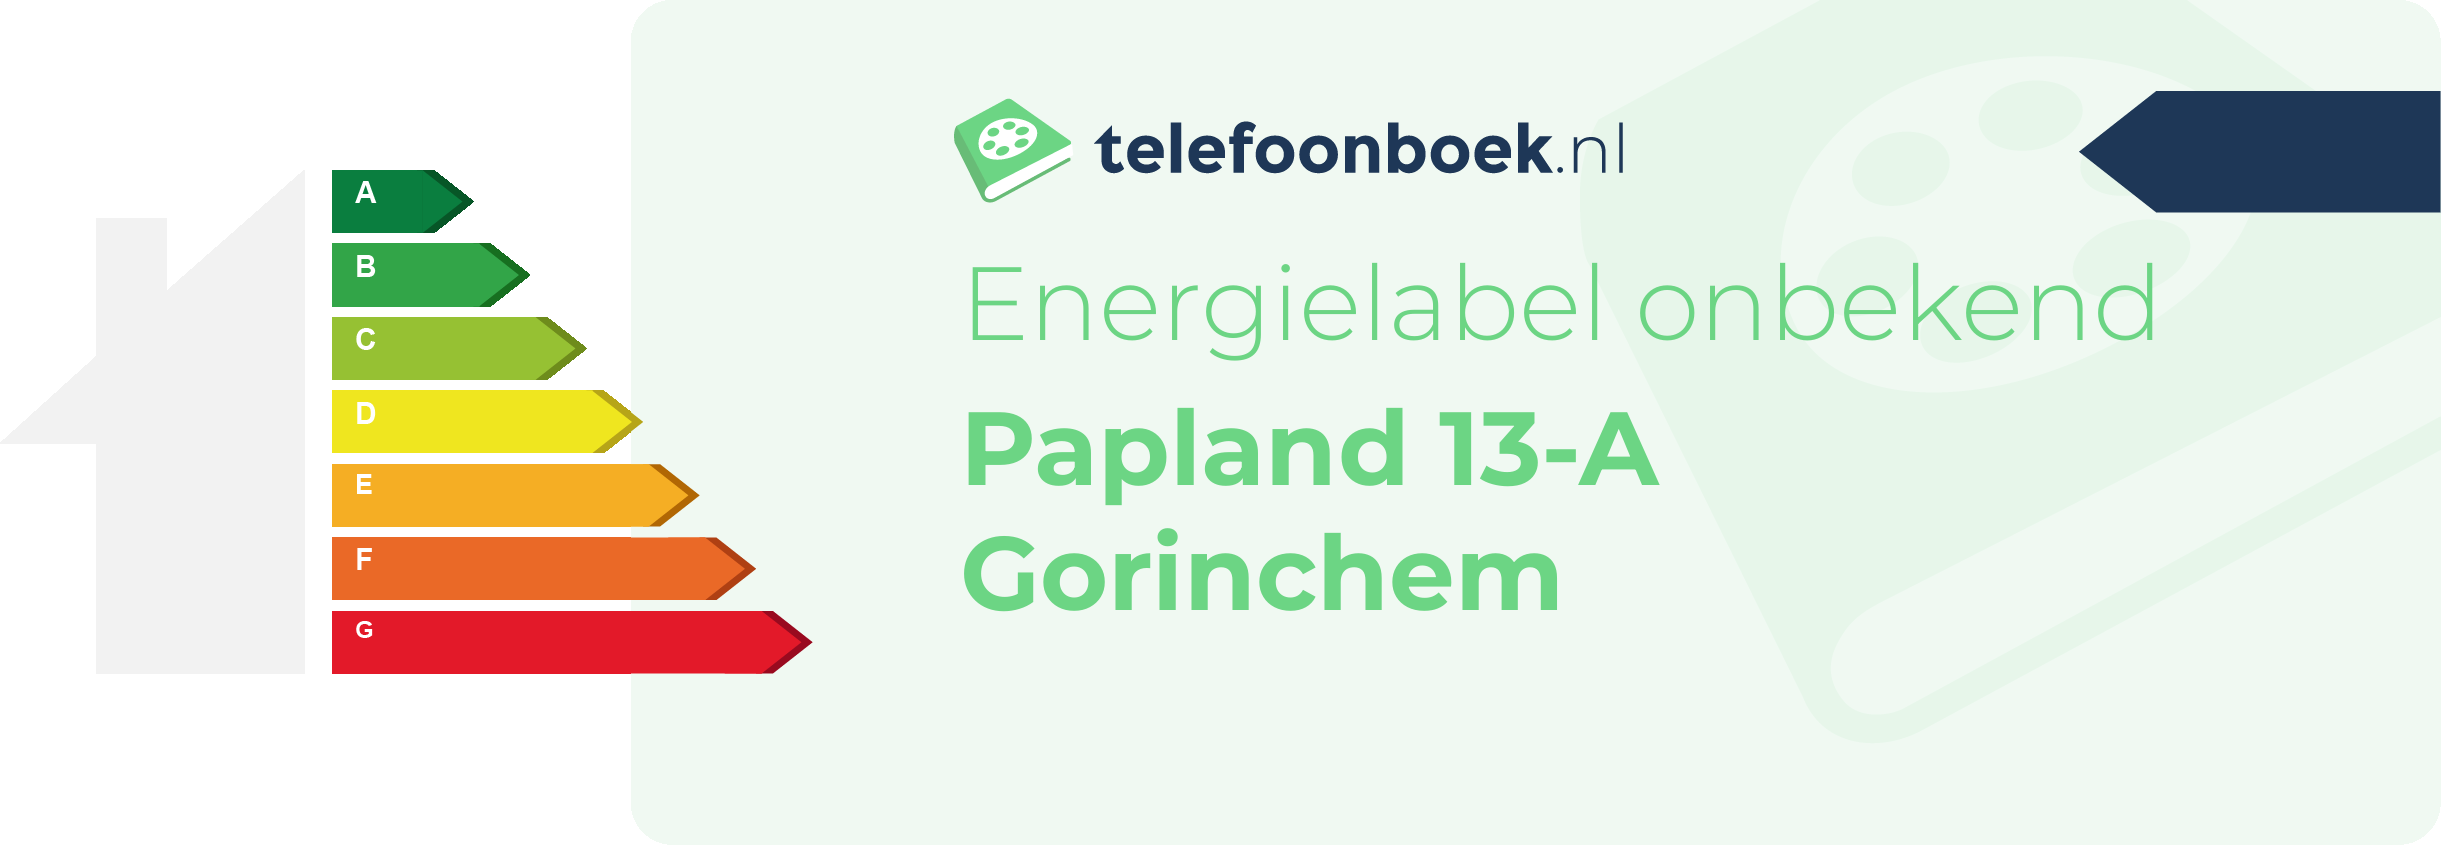 Energielabel Papland 13-A Gorinchem